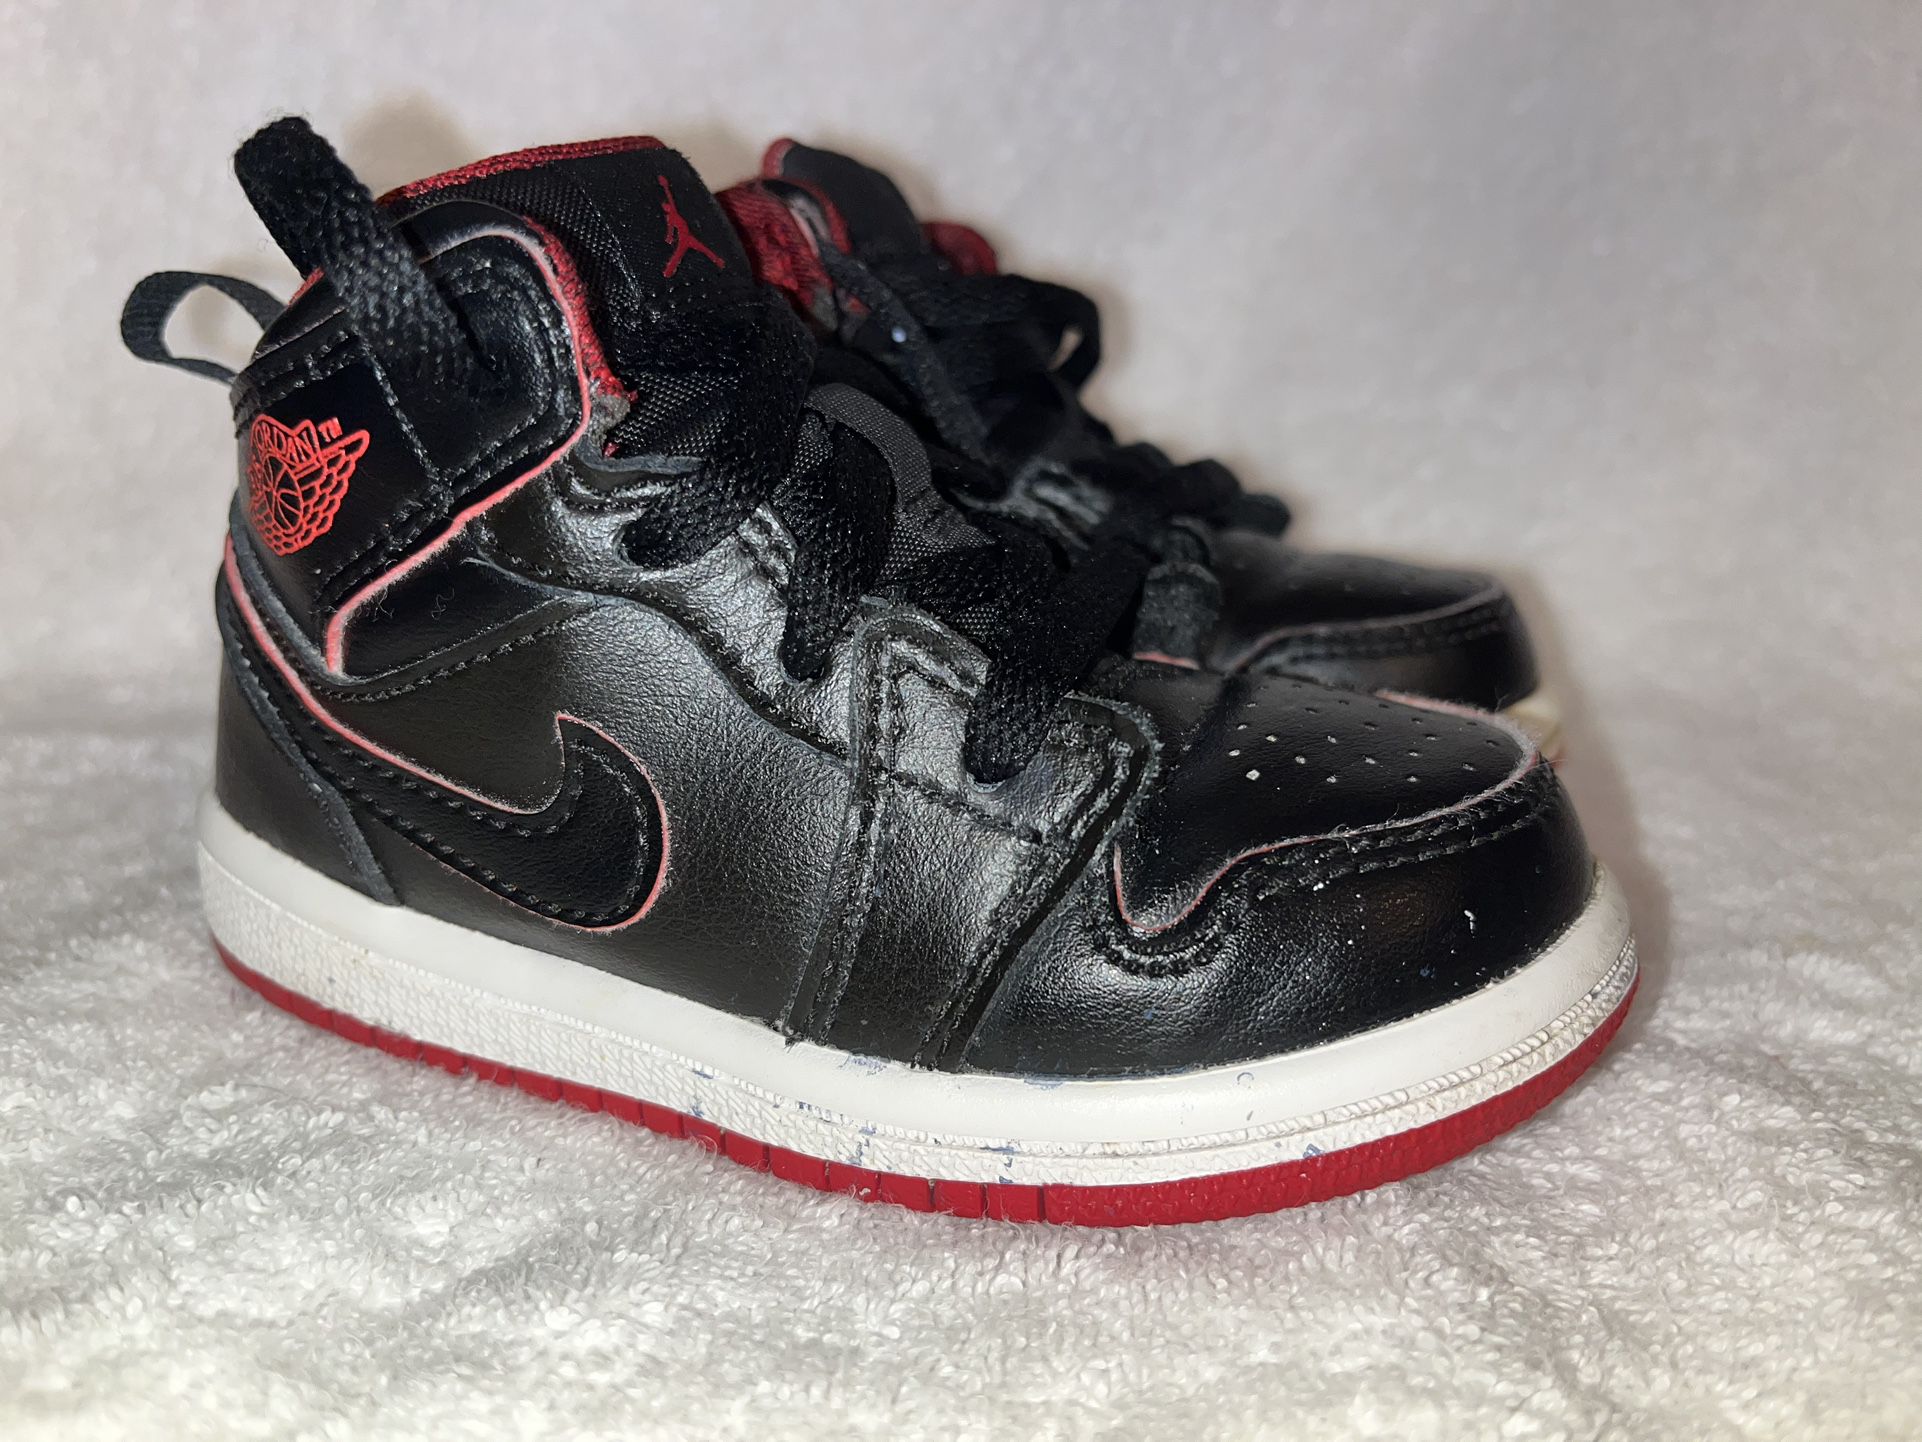 Nike Air Jordan 1 Retro Mid Black Red sz 6c 640735-028 J’s Baby Toddler